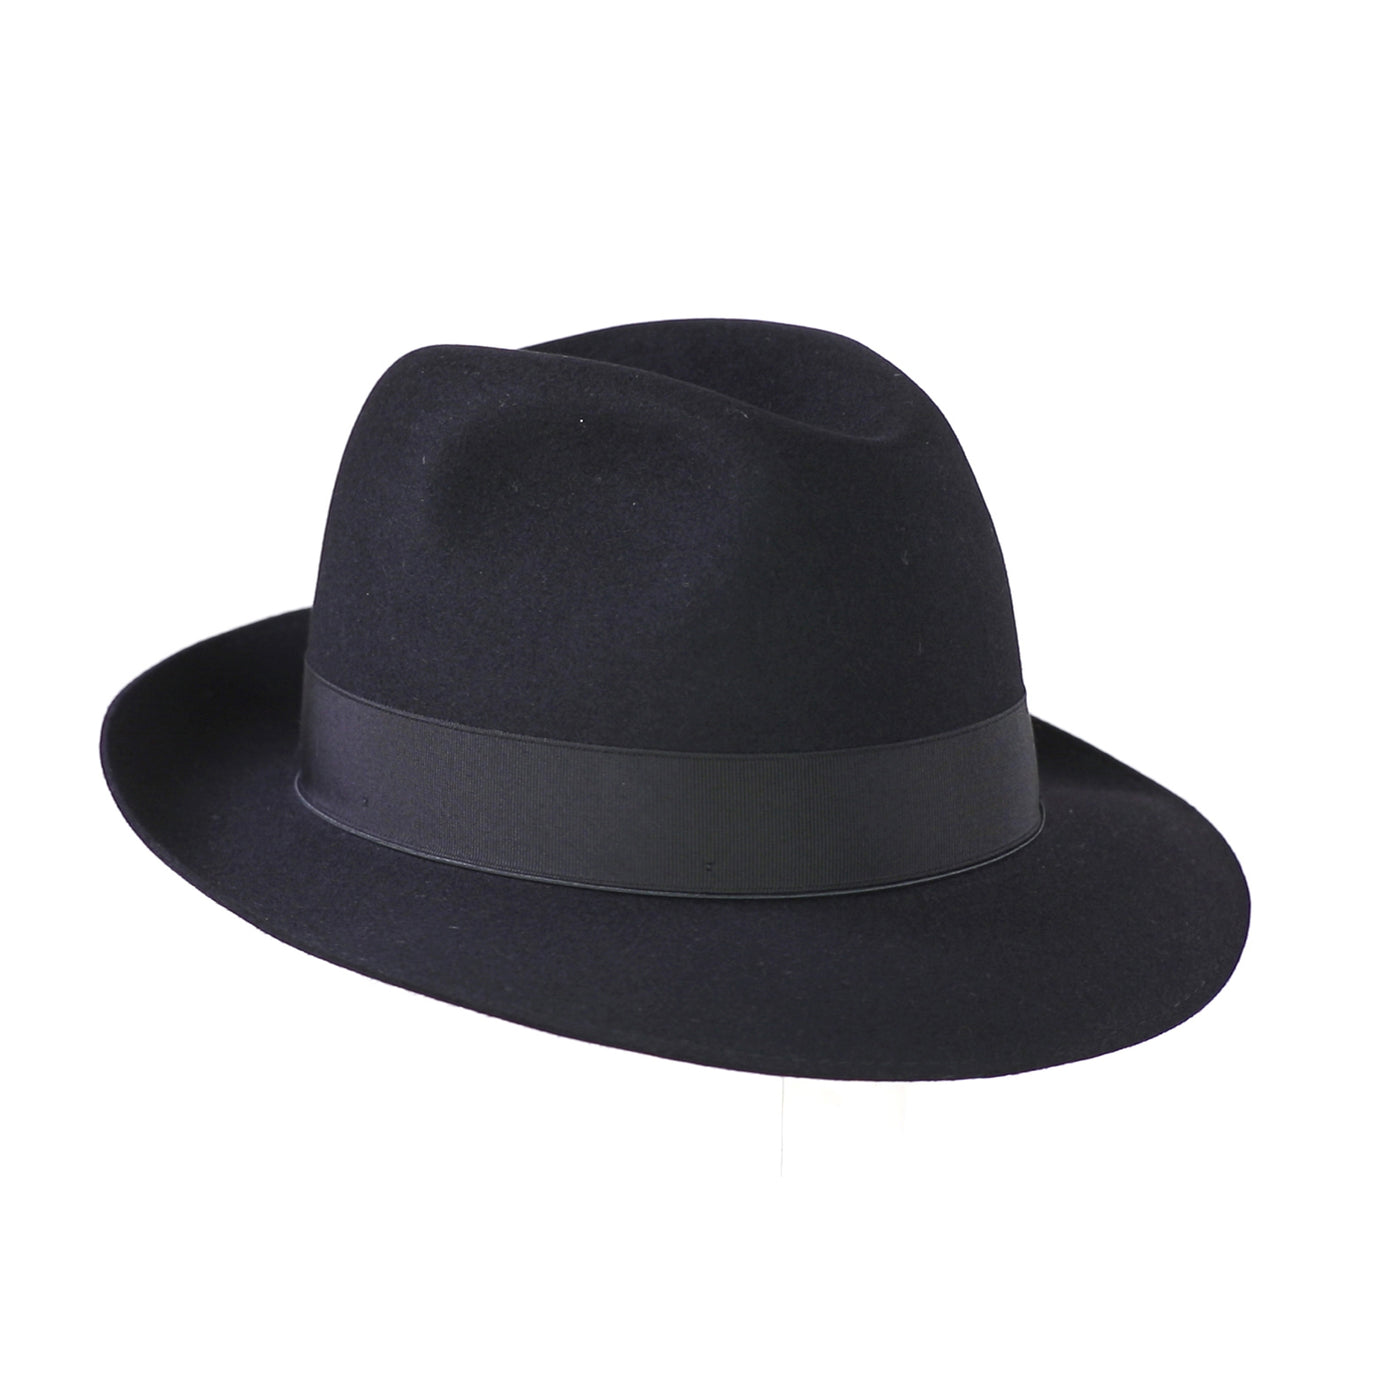 Alessandria 214, product_type] - Borsalino for Atica fedora hat